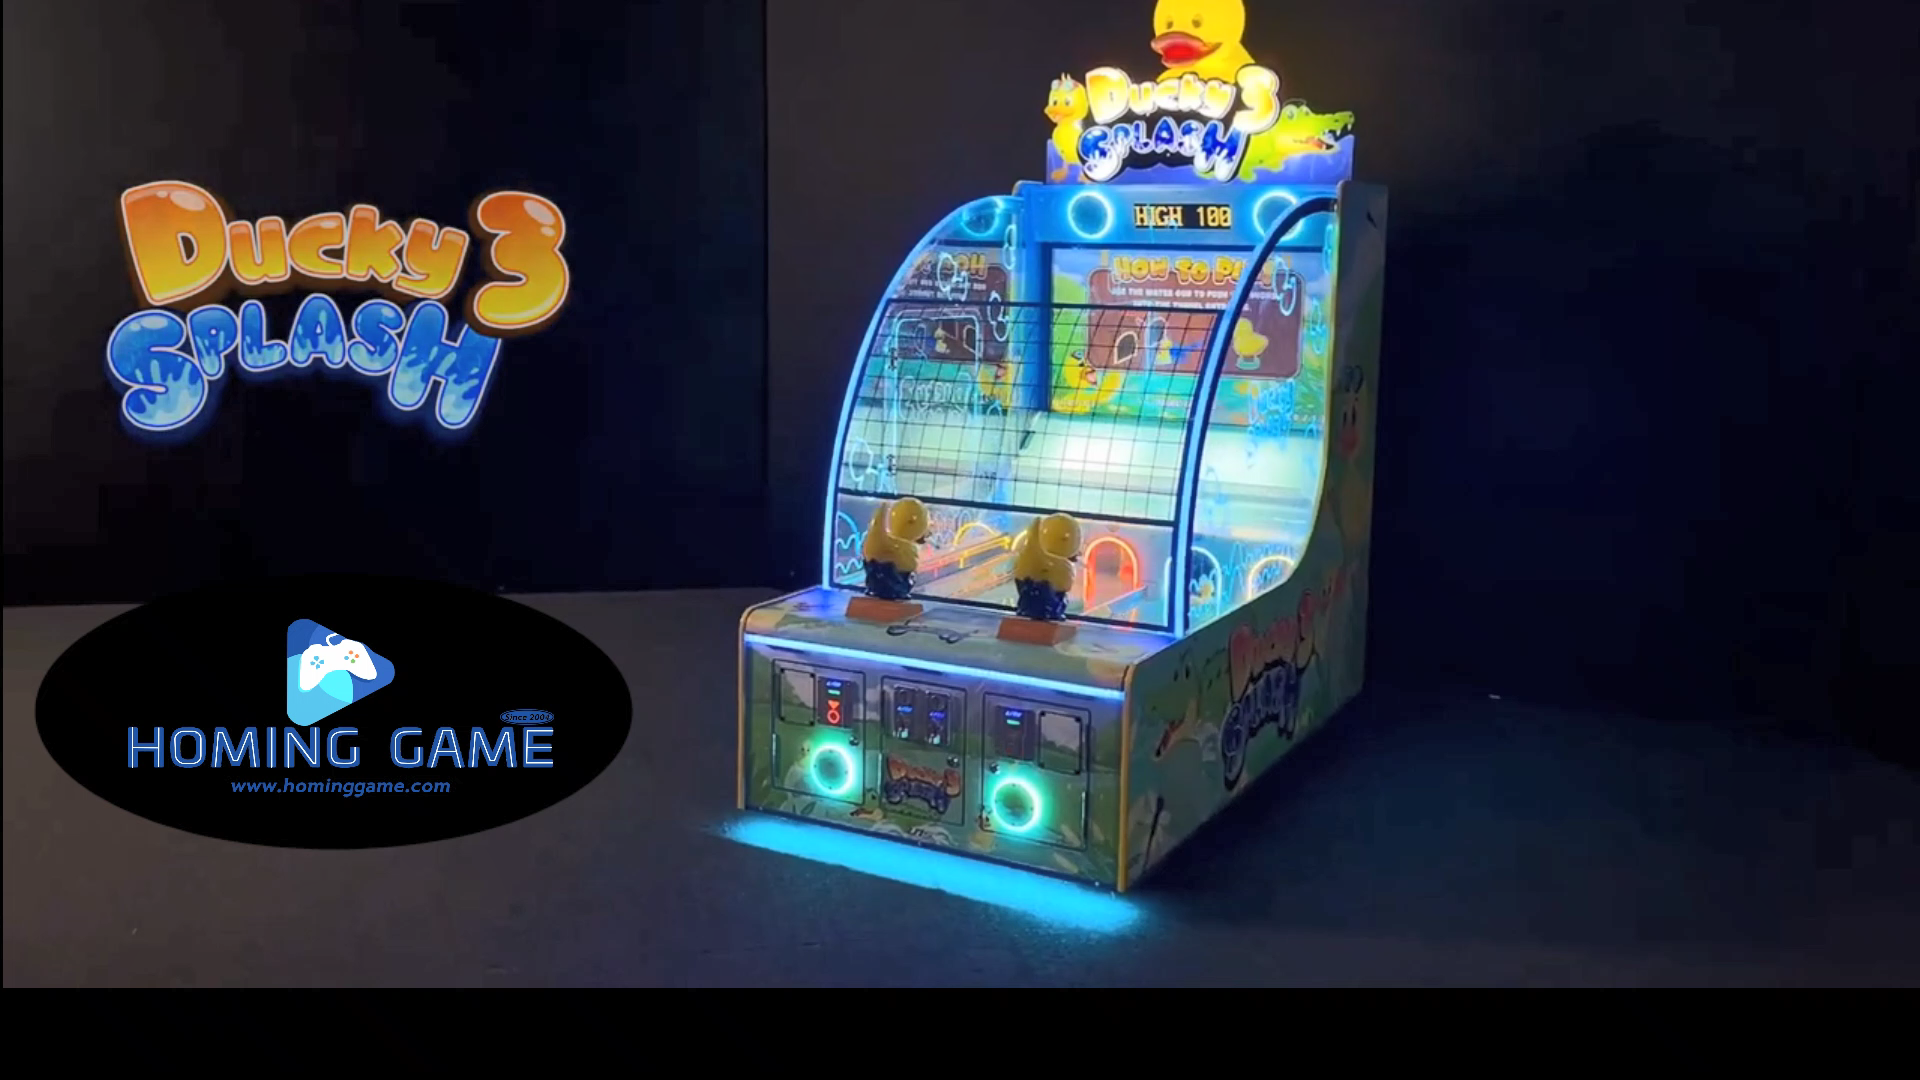 HomingGame Ducky Splash 3: The Ultimate Kids Arcade Redemption Game Machine! #ArcadeGames #KidsGames